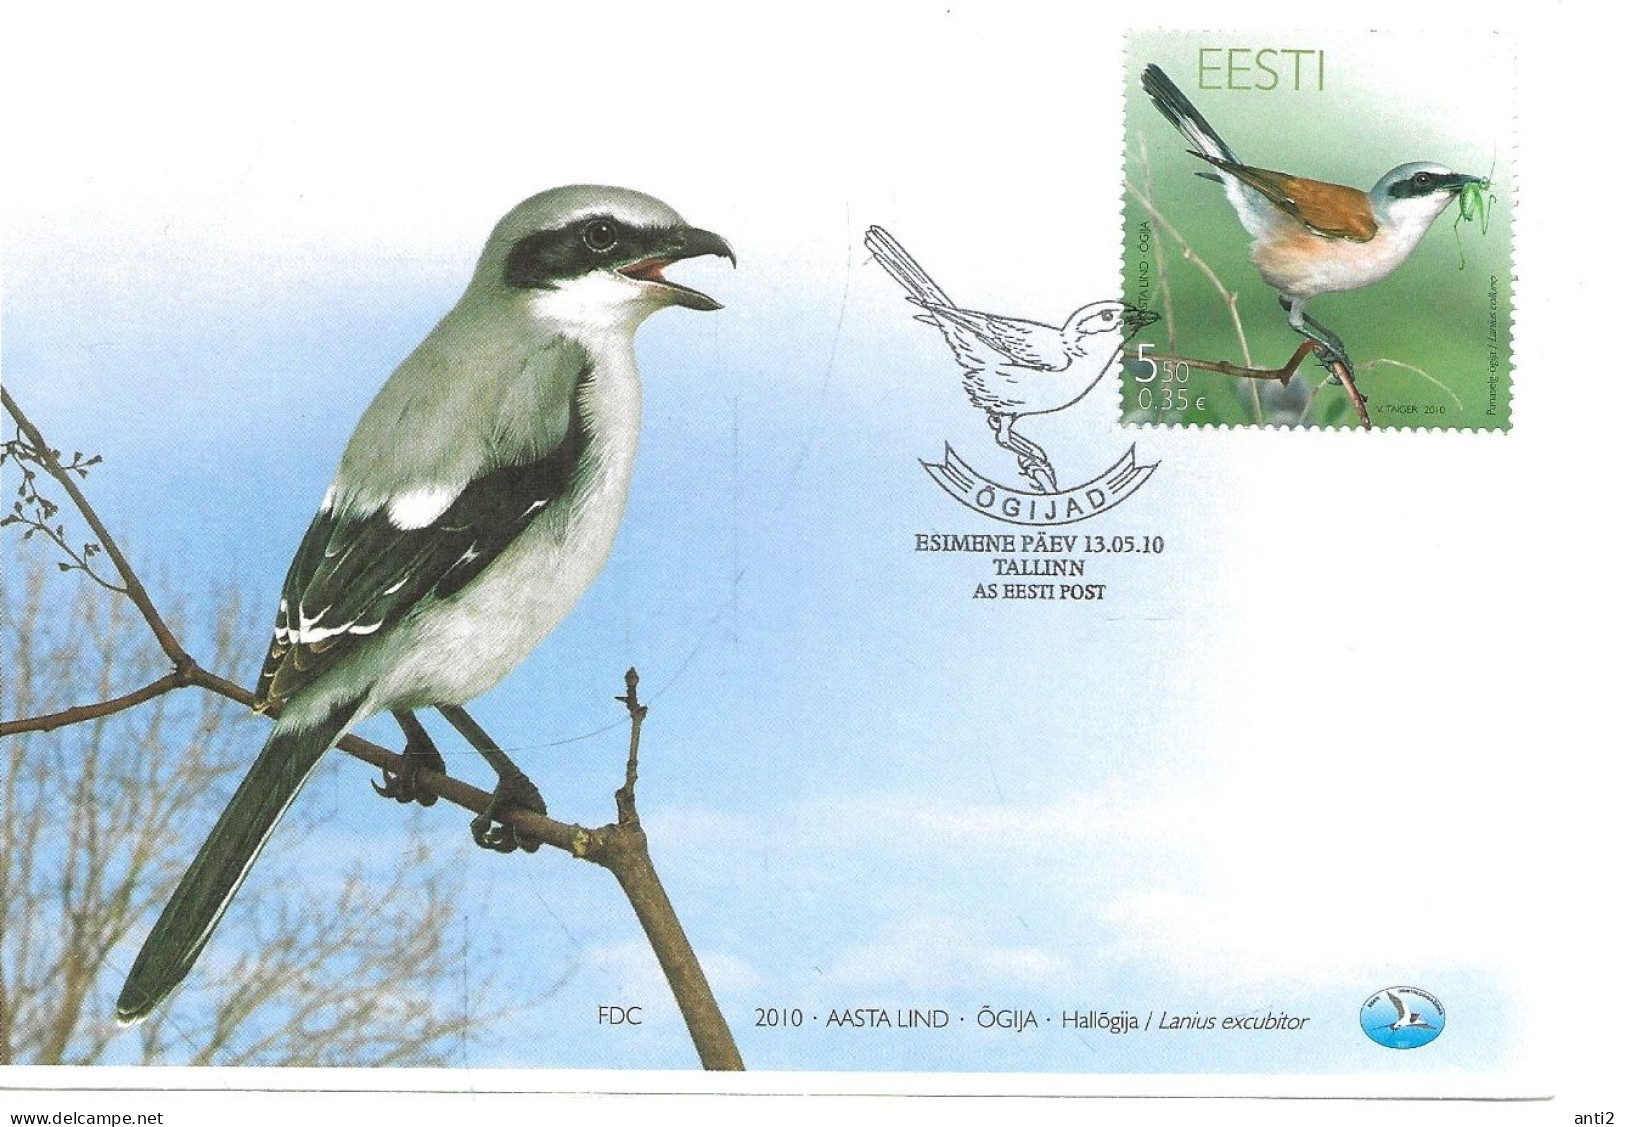 Estonia Eesti Estland 2010 Bird Of The Year. Red-backed Shrike (Lanius Collurio) Mi 666  FDC - Estonie